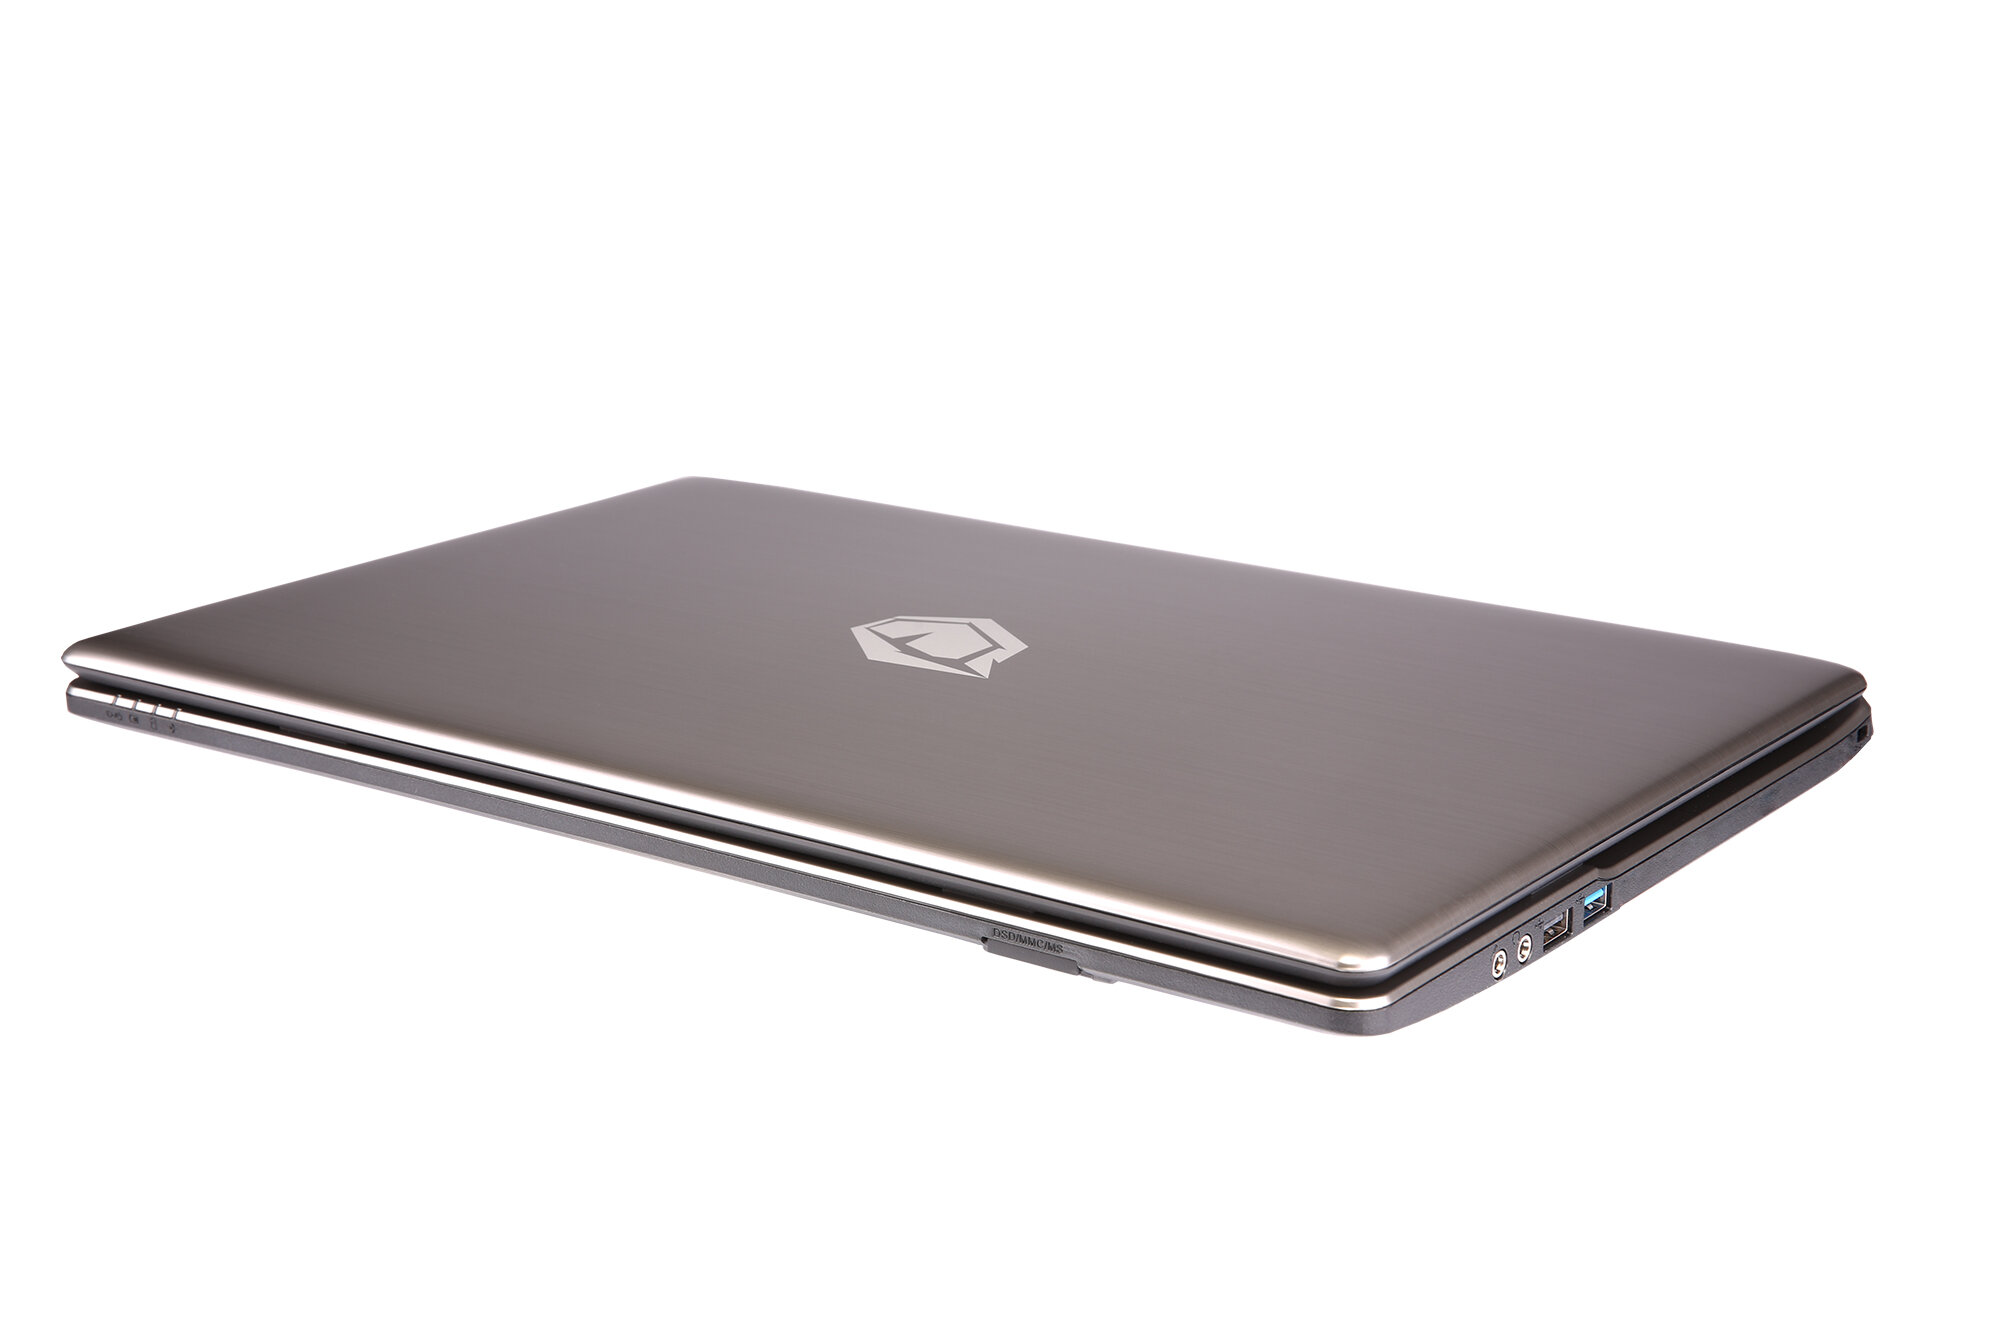 Abra A7 V5.4 17.3" Gaming Laptop 15094